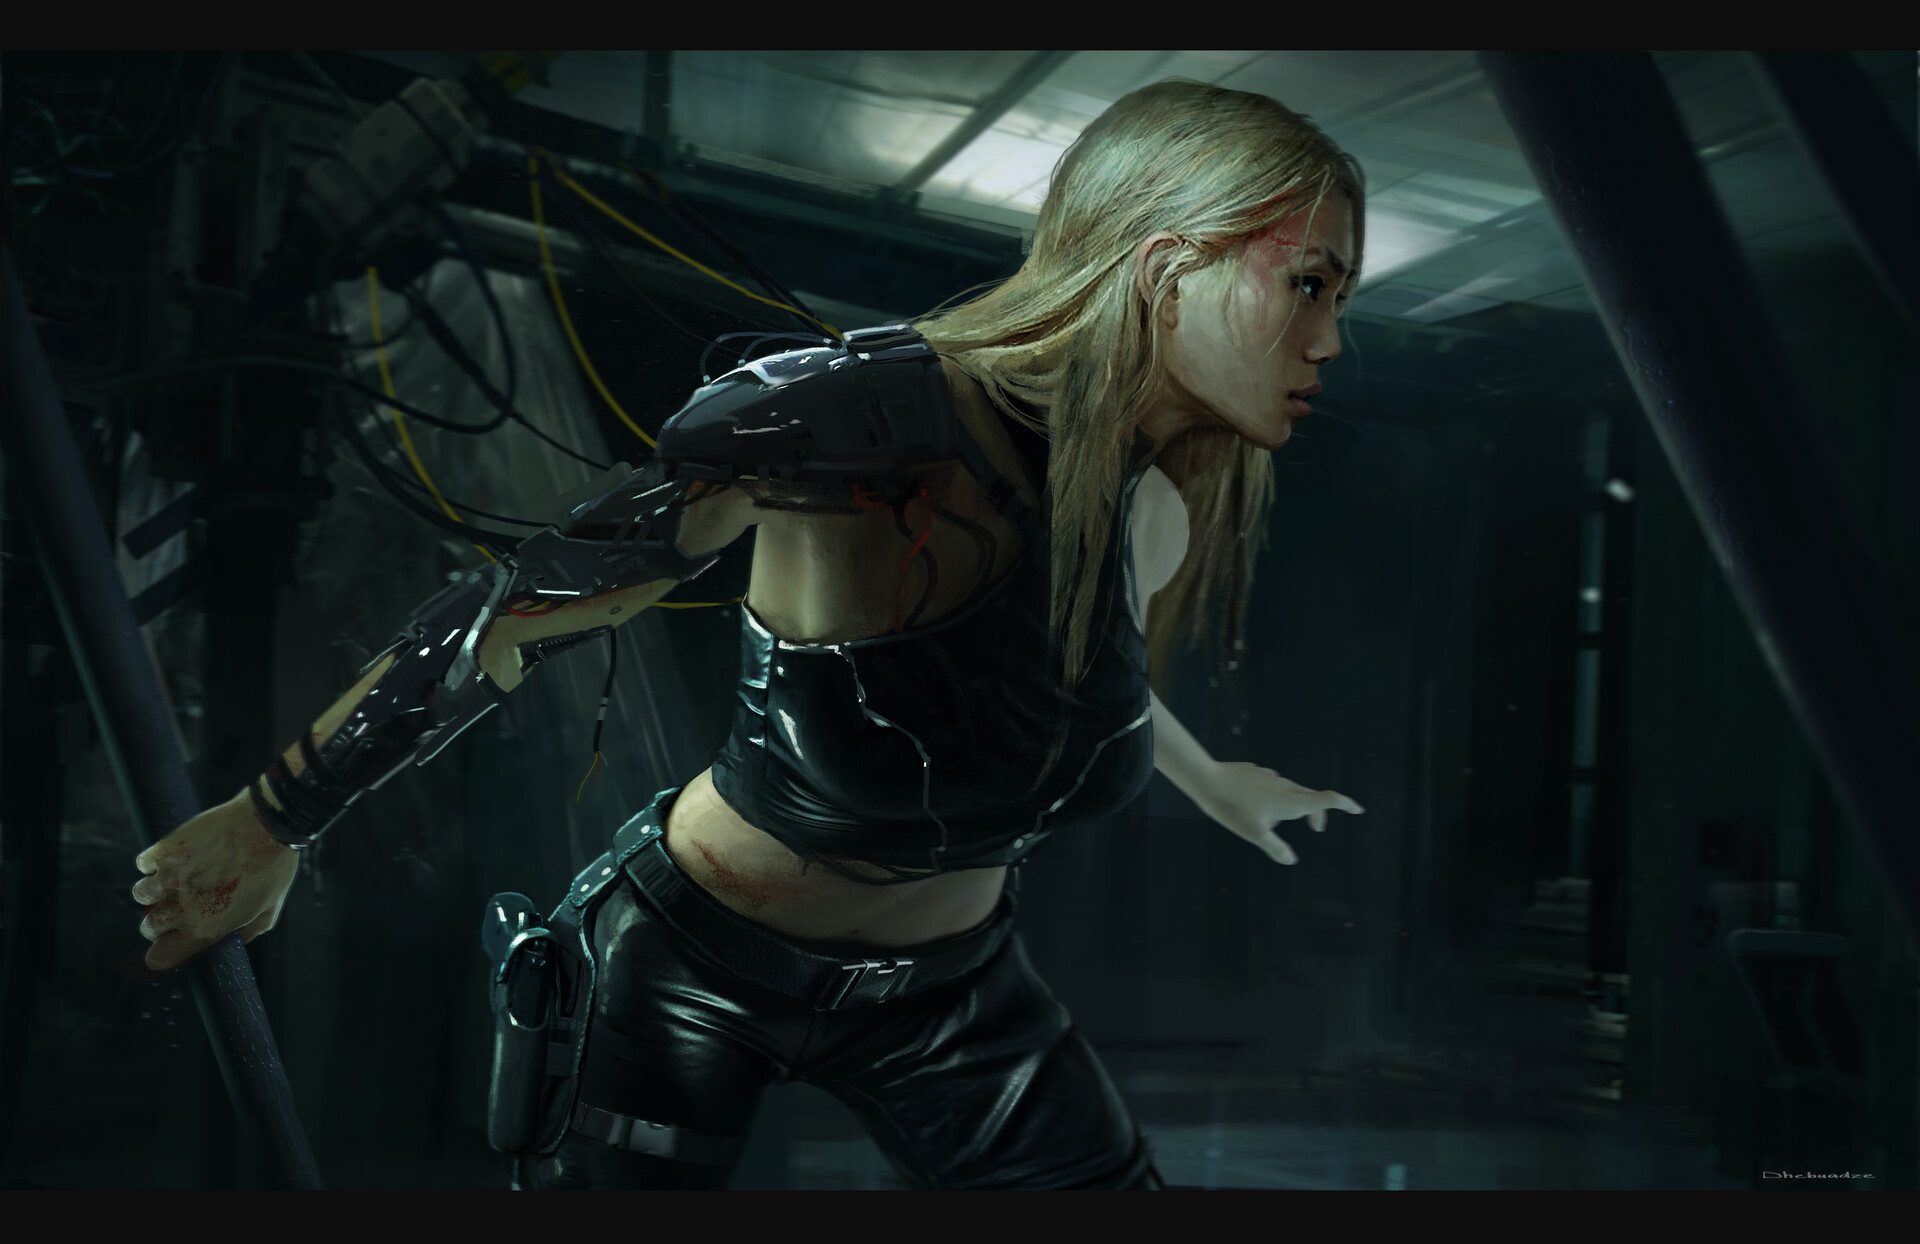 Nana Dhebuadze Artwork Fantasy Art Science Fiction Futuristic Cyberpunk Women Blonde 1920x1244